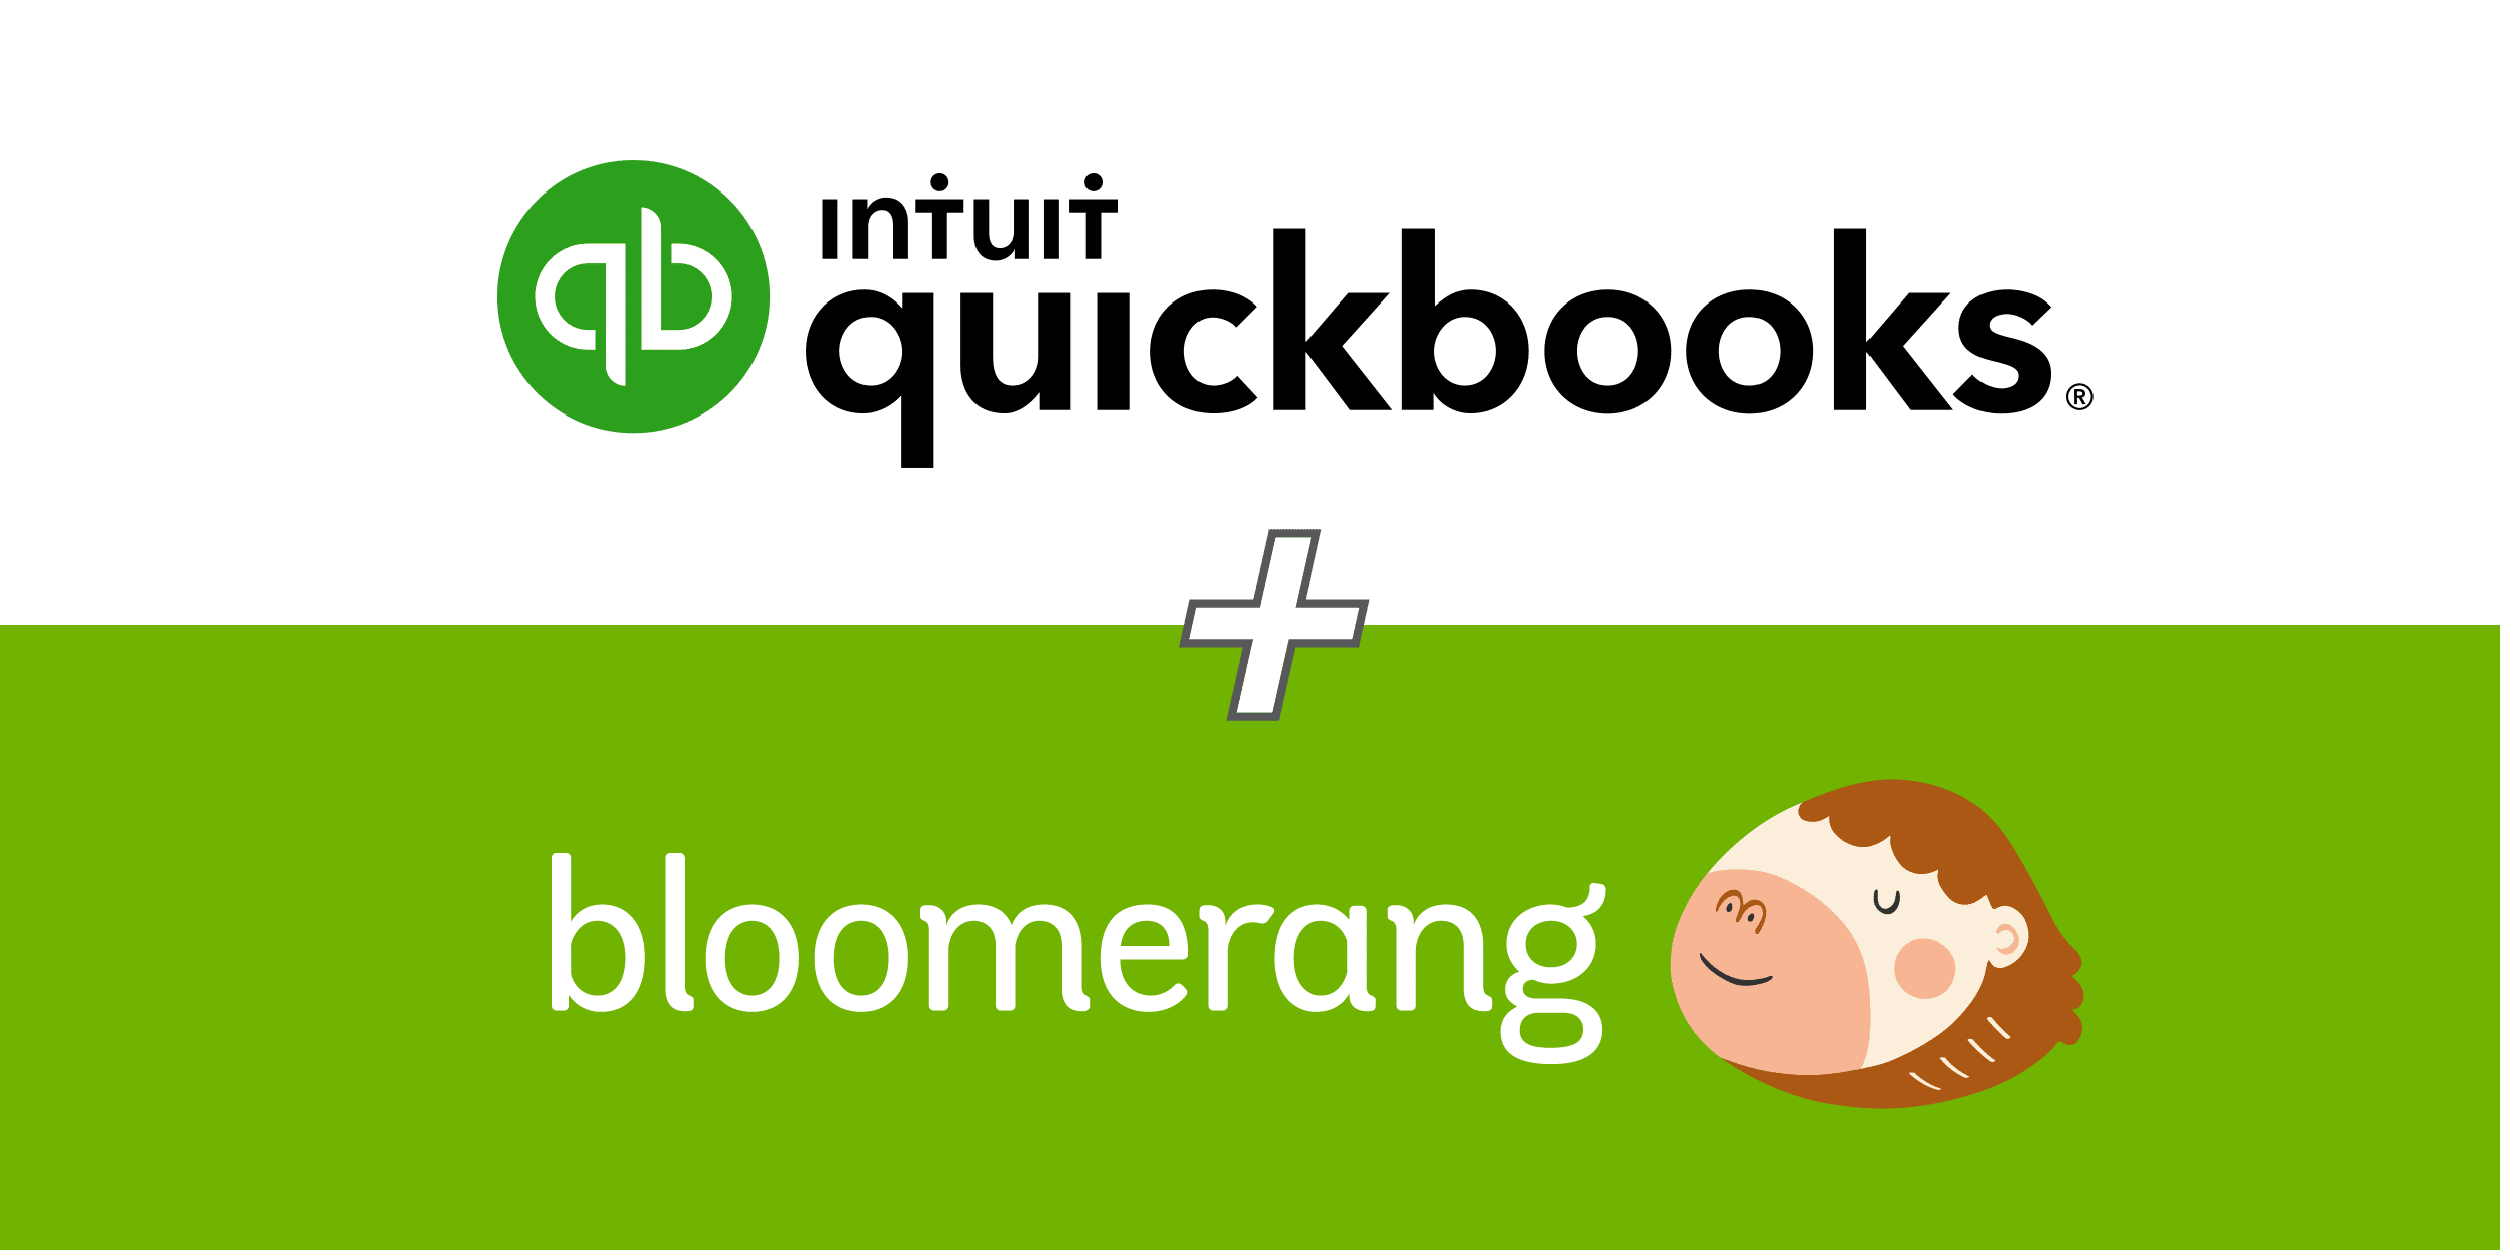 intuit quickbooks and bloomerang logos